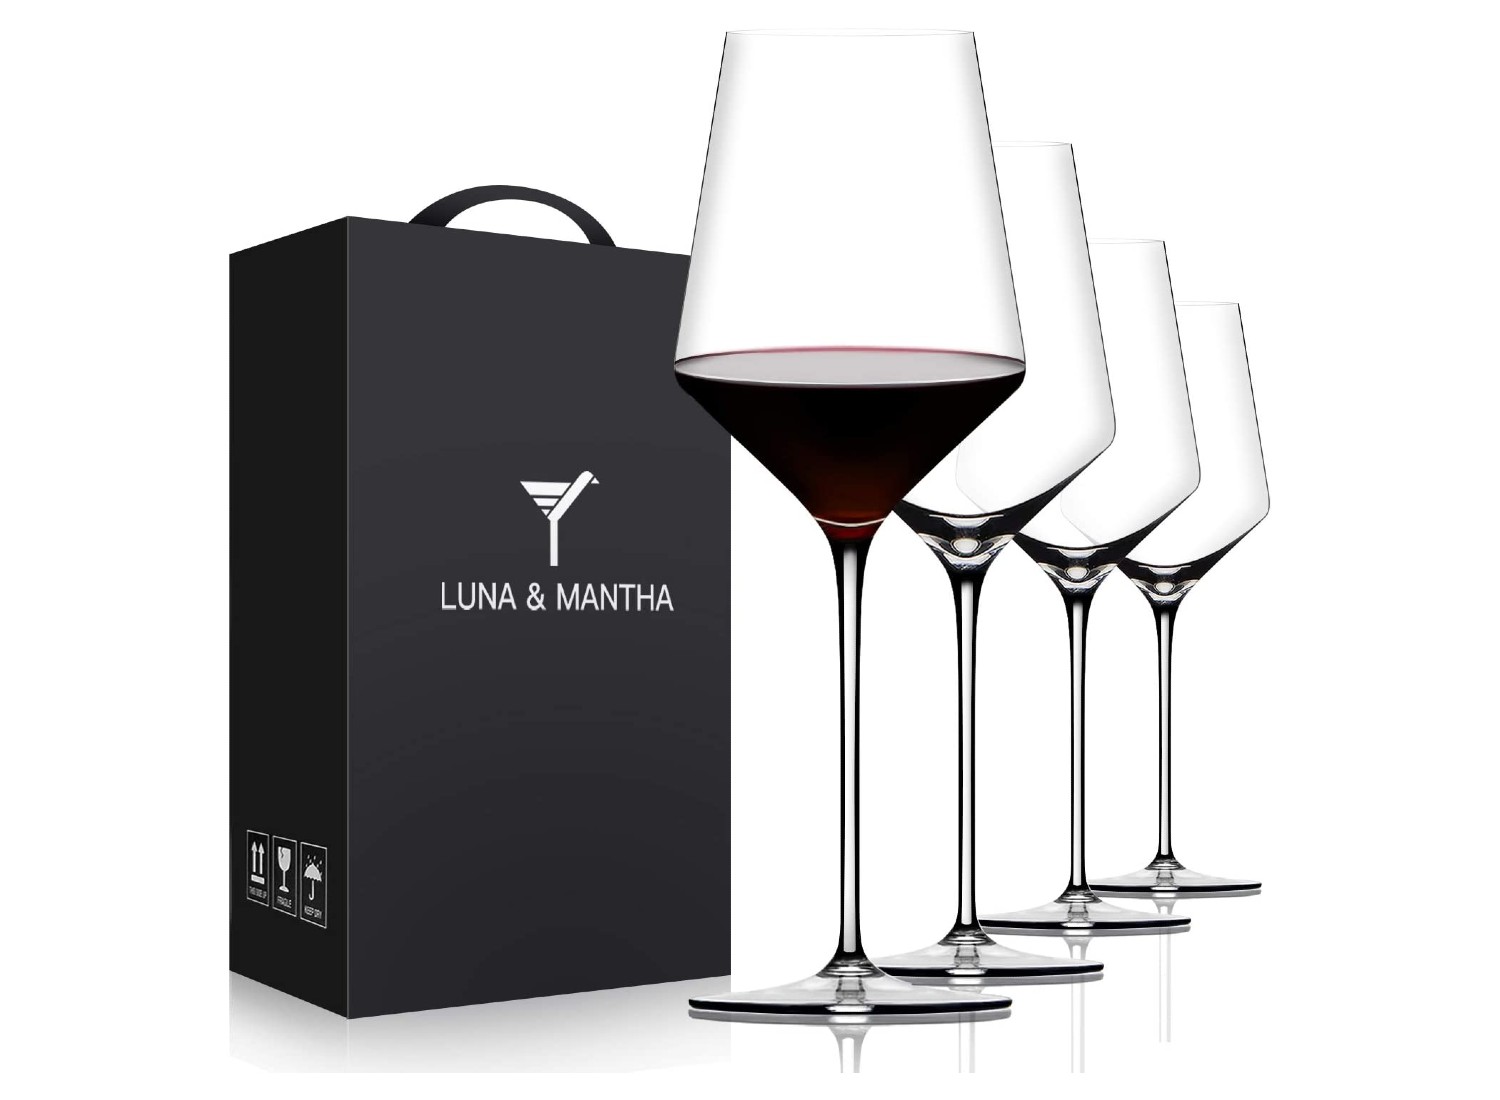 https://www.brit.co/reviews/wp-content/uploads/2023/04/OJA-luna-mantha-crystal-wine-glasses-britco.jpg